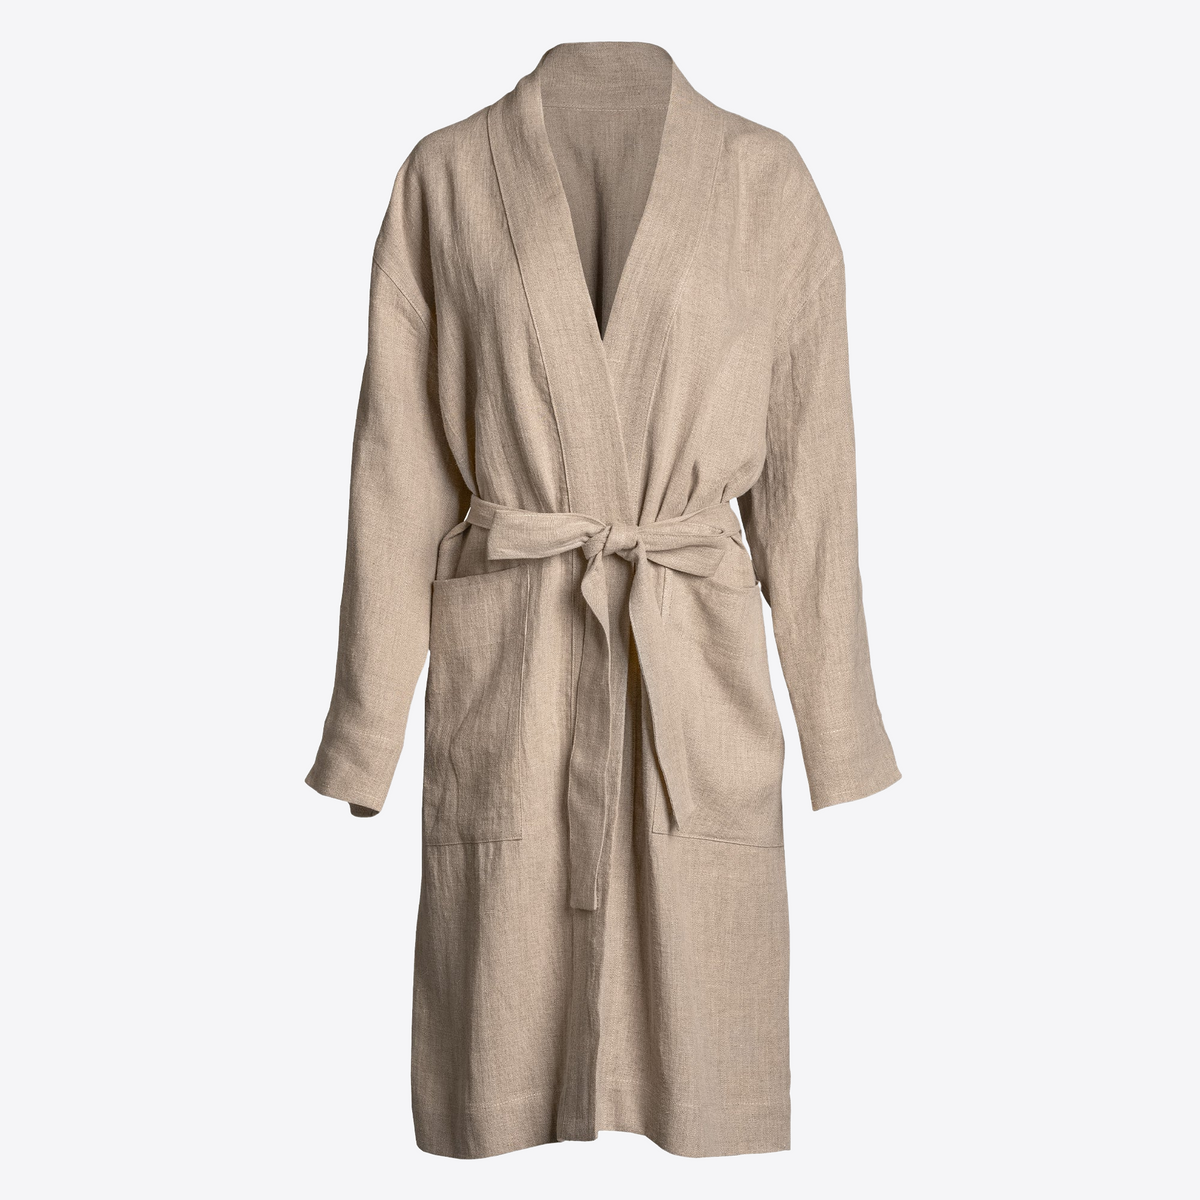 MENIQUE 100% Linen Bath Robe